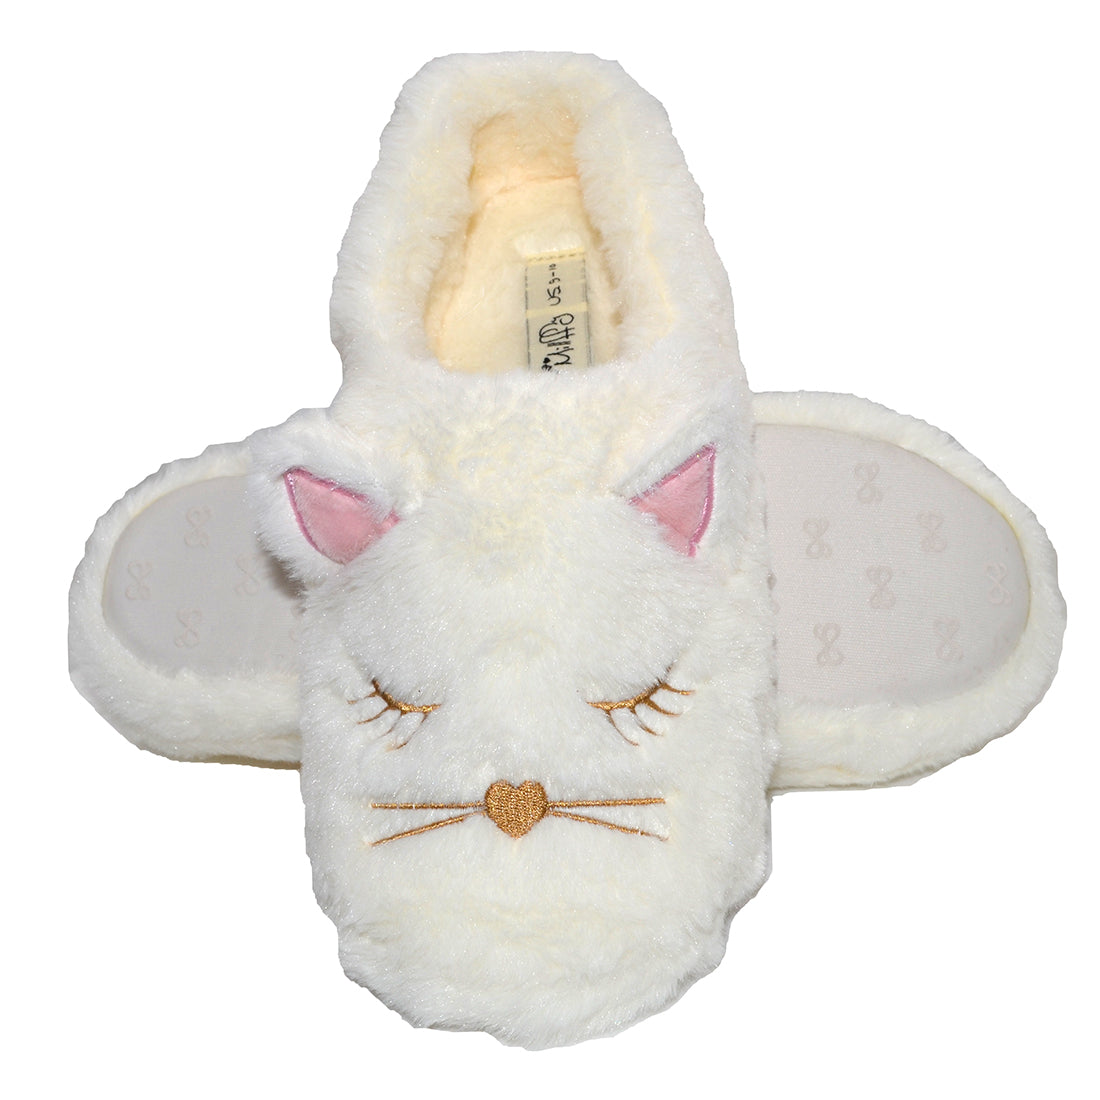 Millffy Animal Soft Cozy Plush Slippers womens cat slippers Bedroom cat girl fuzzy slippers